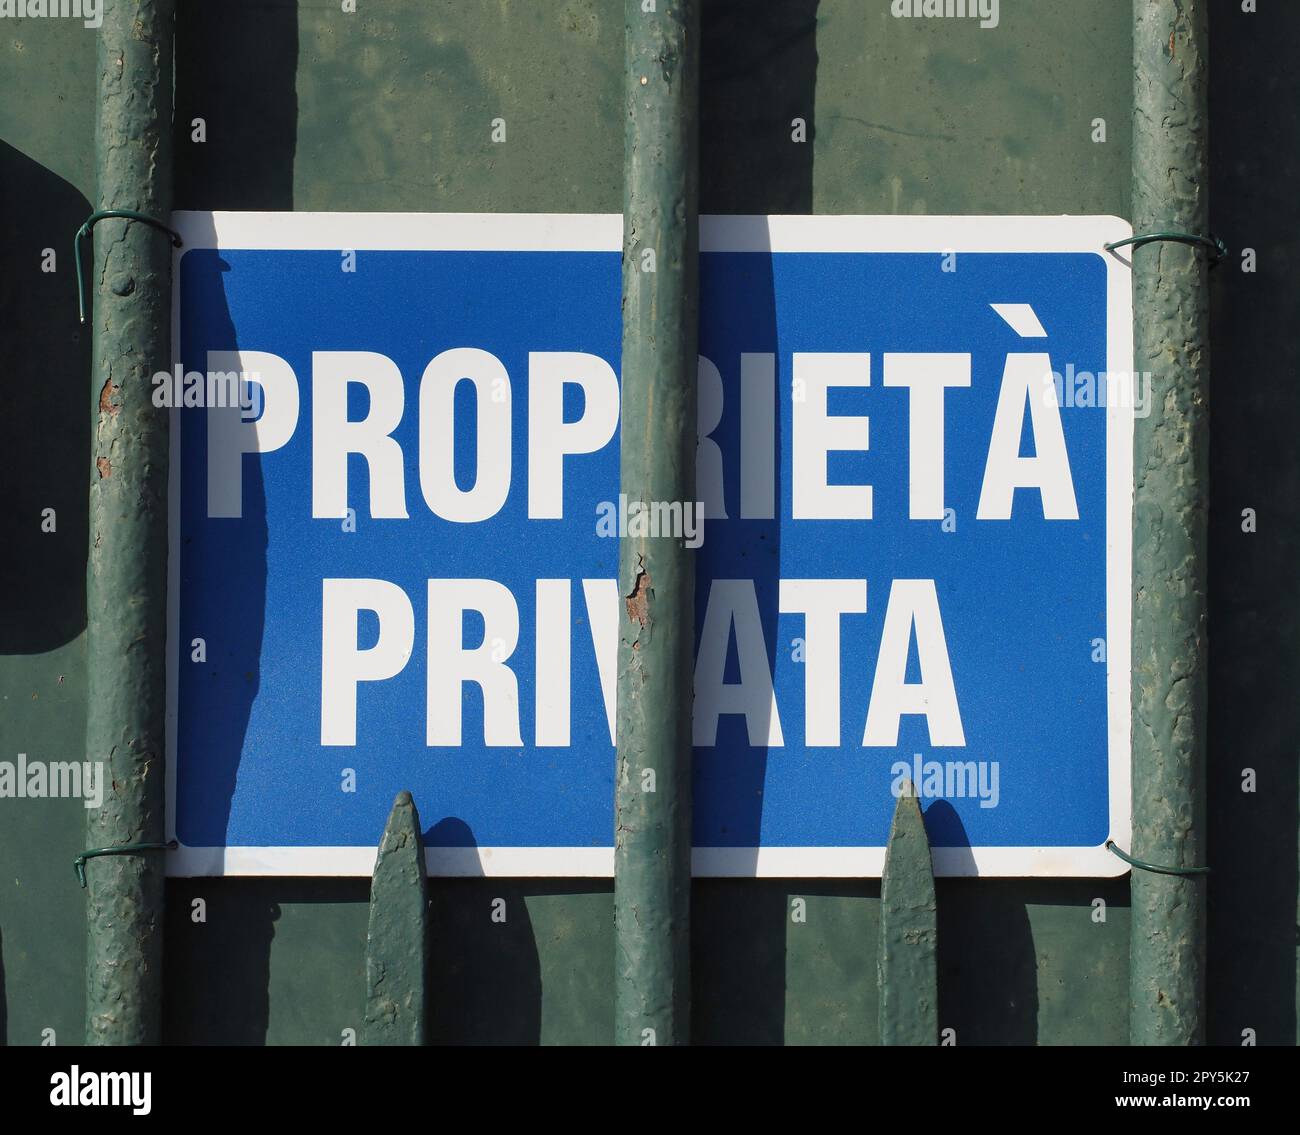 proprieta privata translation private property sign Stock Photo